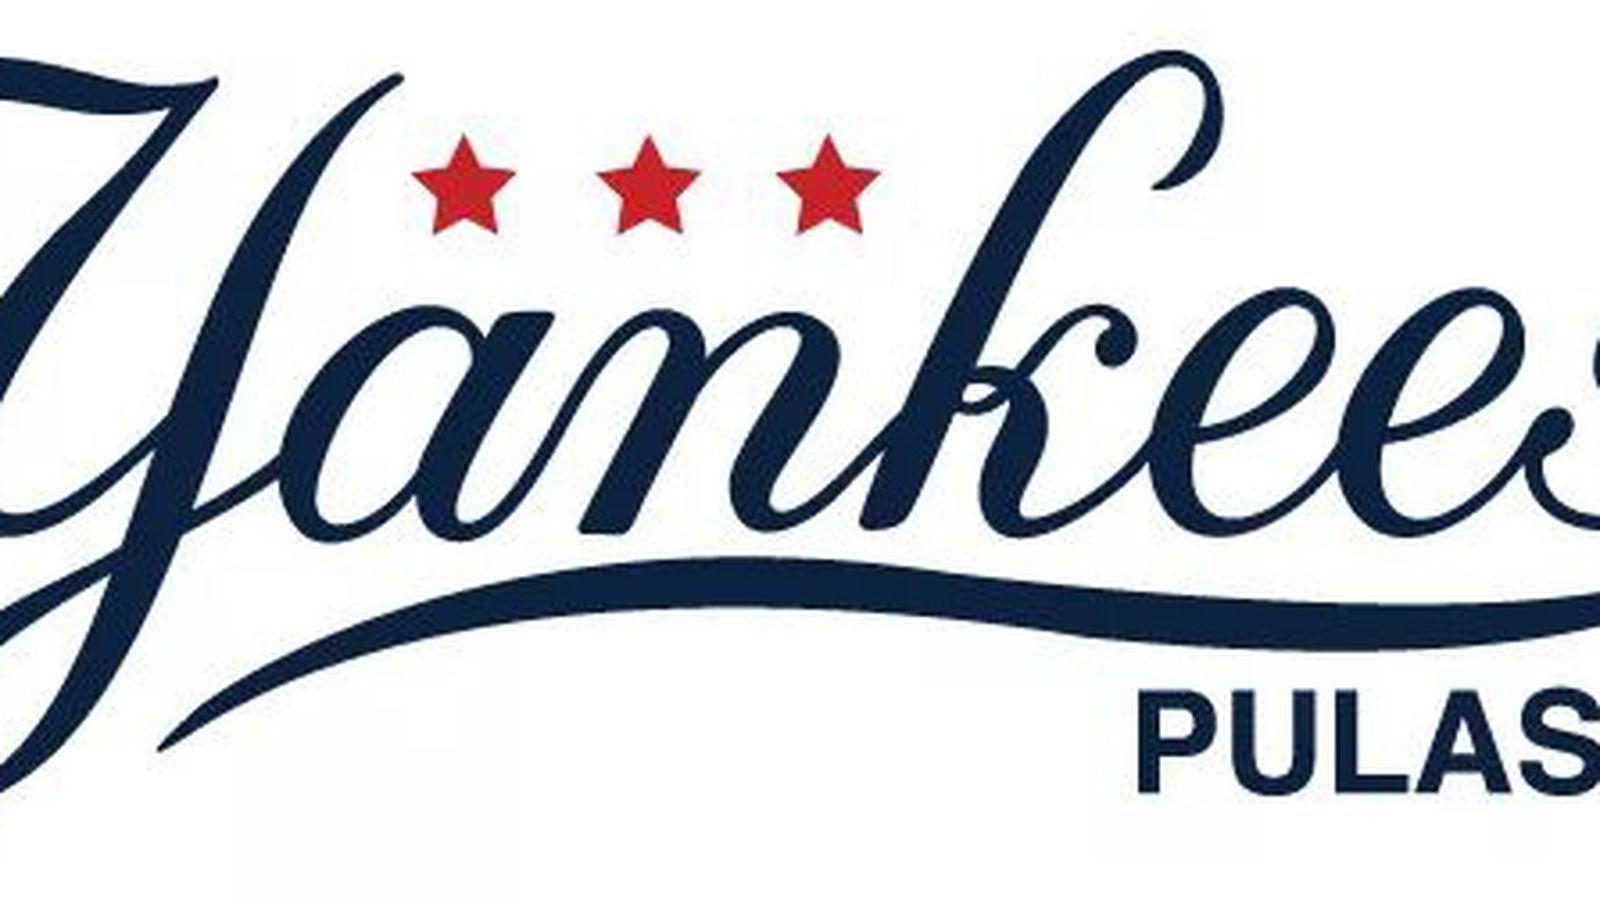 Pulaski Logo - Pulaski Yankees release logo and uniform